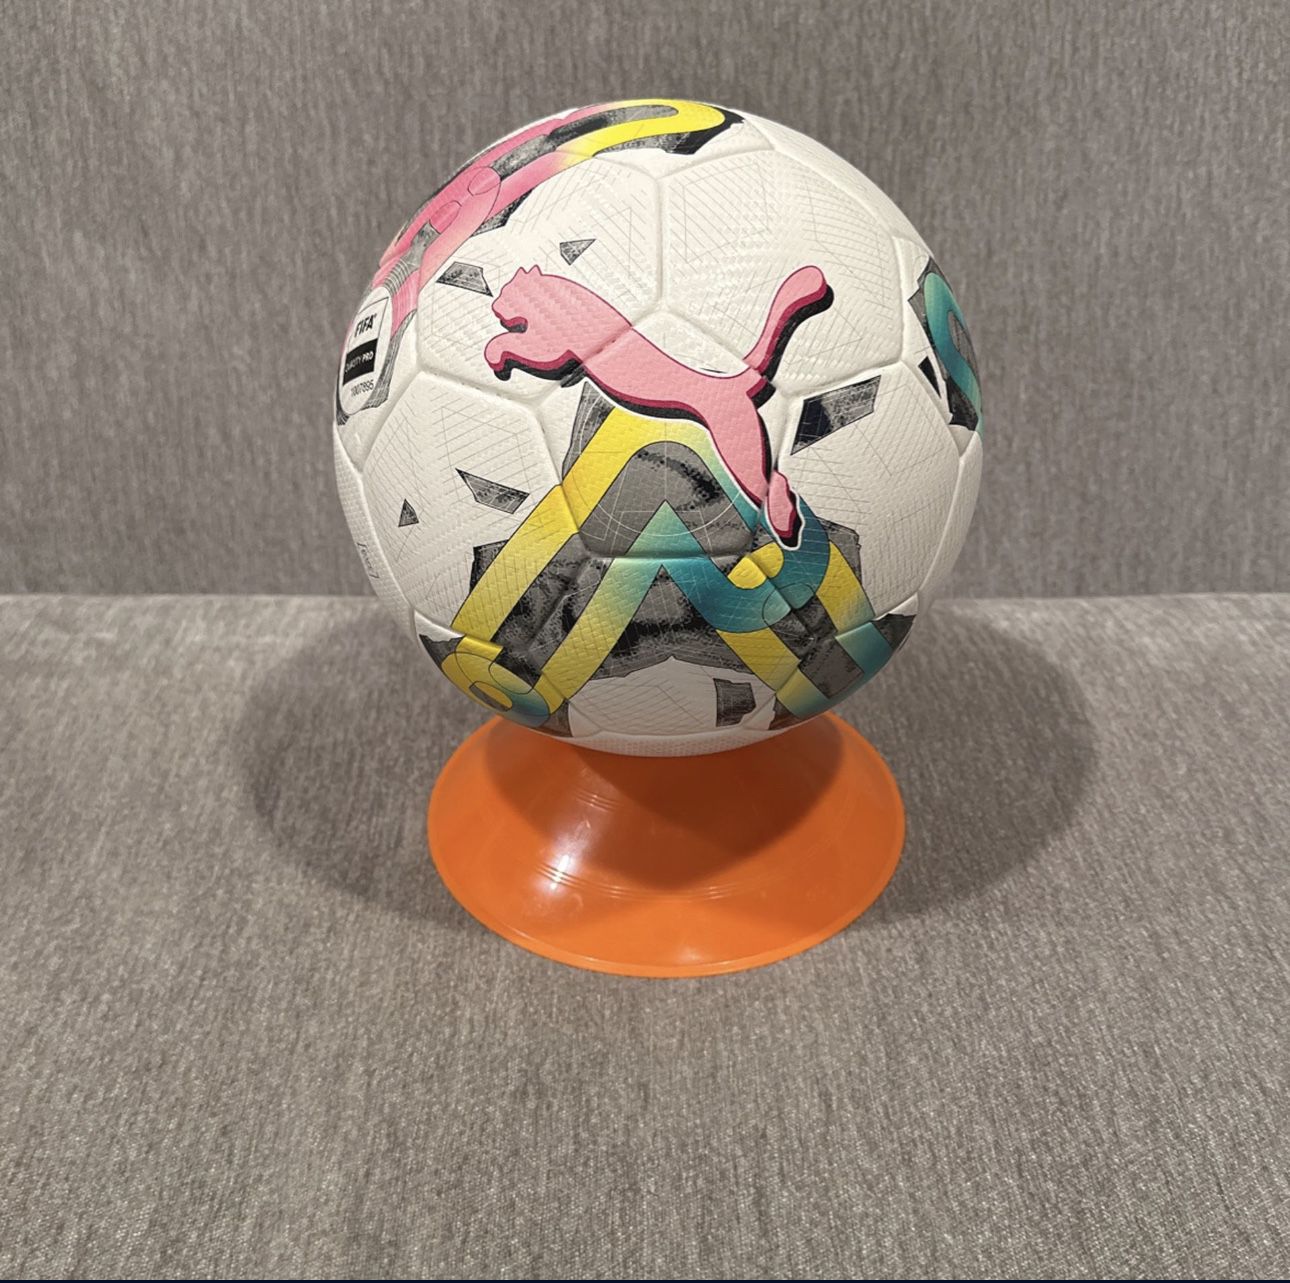 Puma Soccer Ball